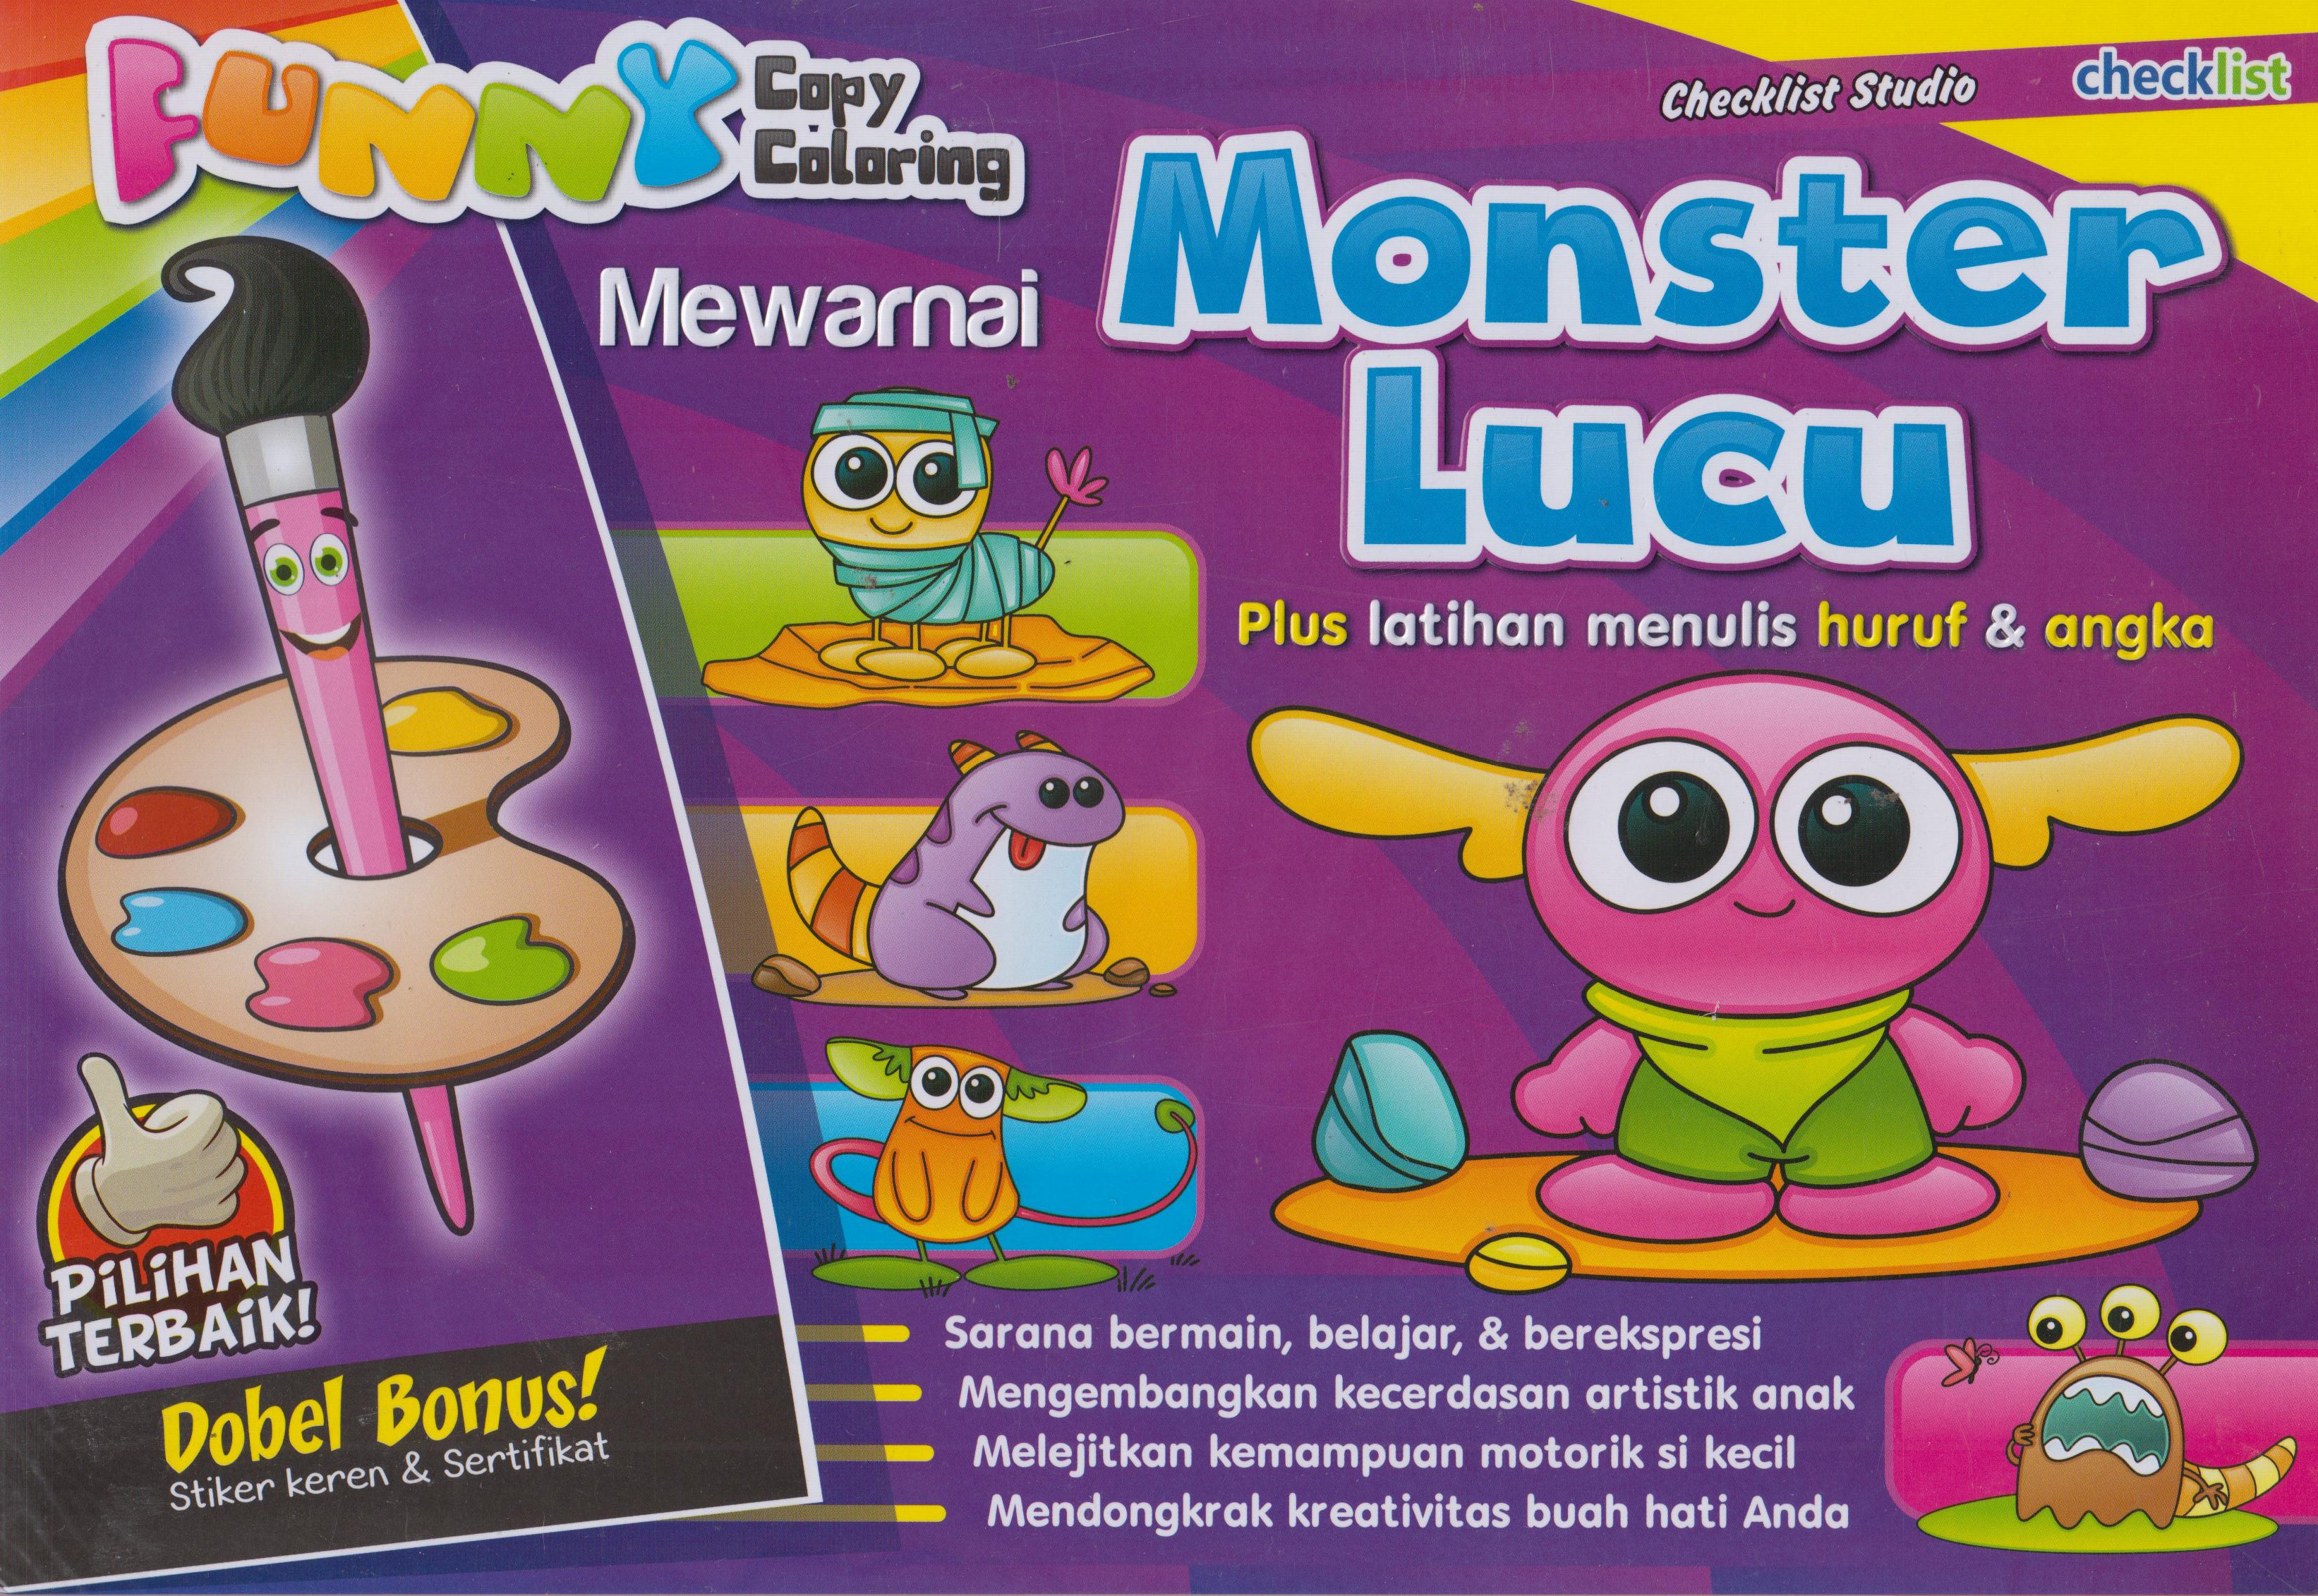 Buku Mewarnai Monster Lucu Checklist Studio Mizanstore